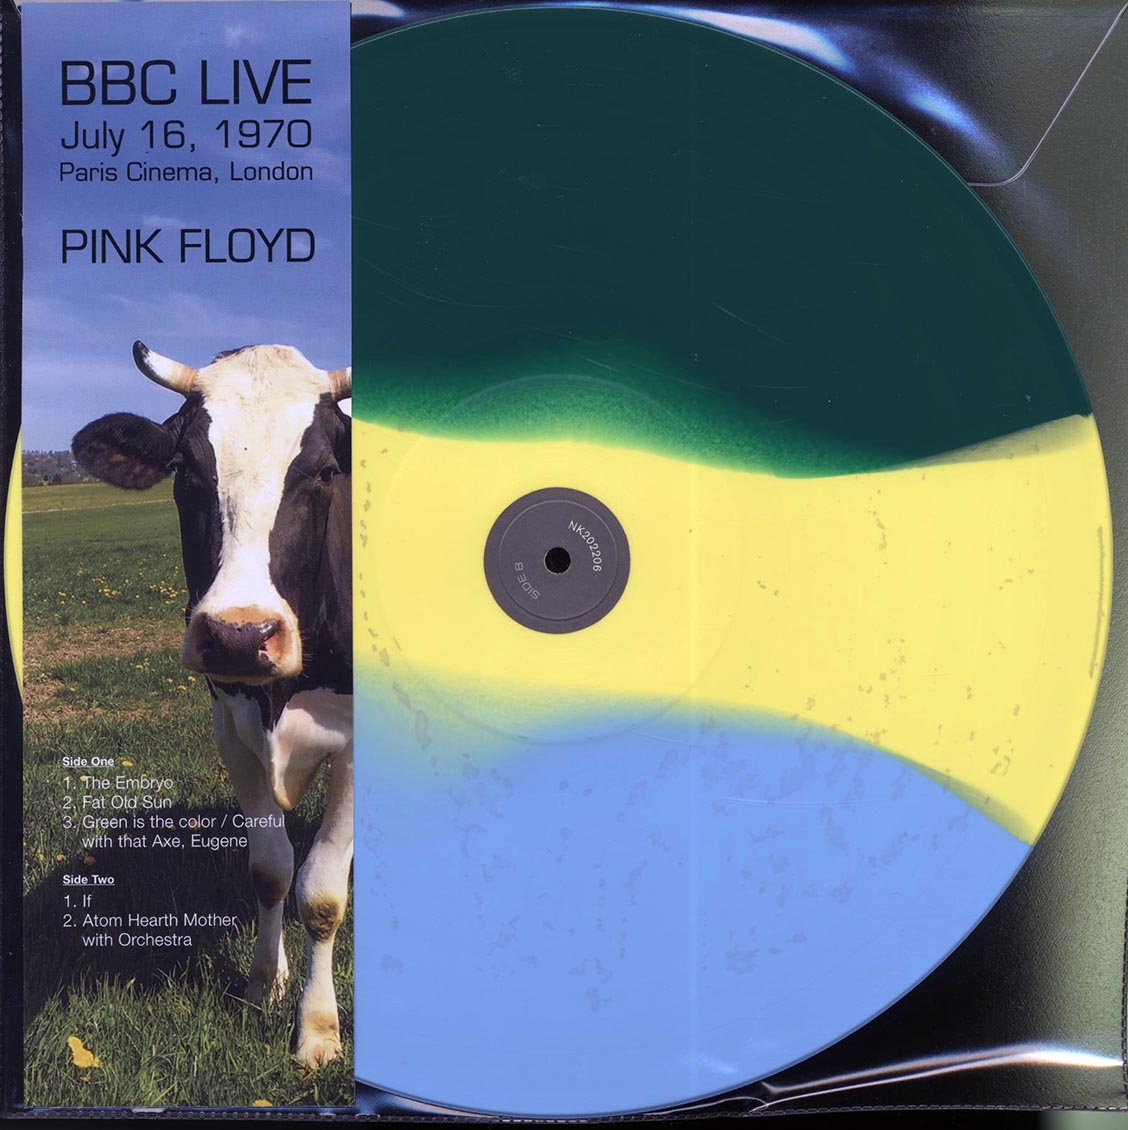 Pink Floyd - Paris Cinema, London, BBC July 16, 1970 (ltd. ed.) (tri-color vinyl) - Vinyl LP